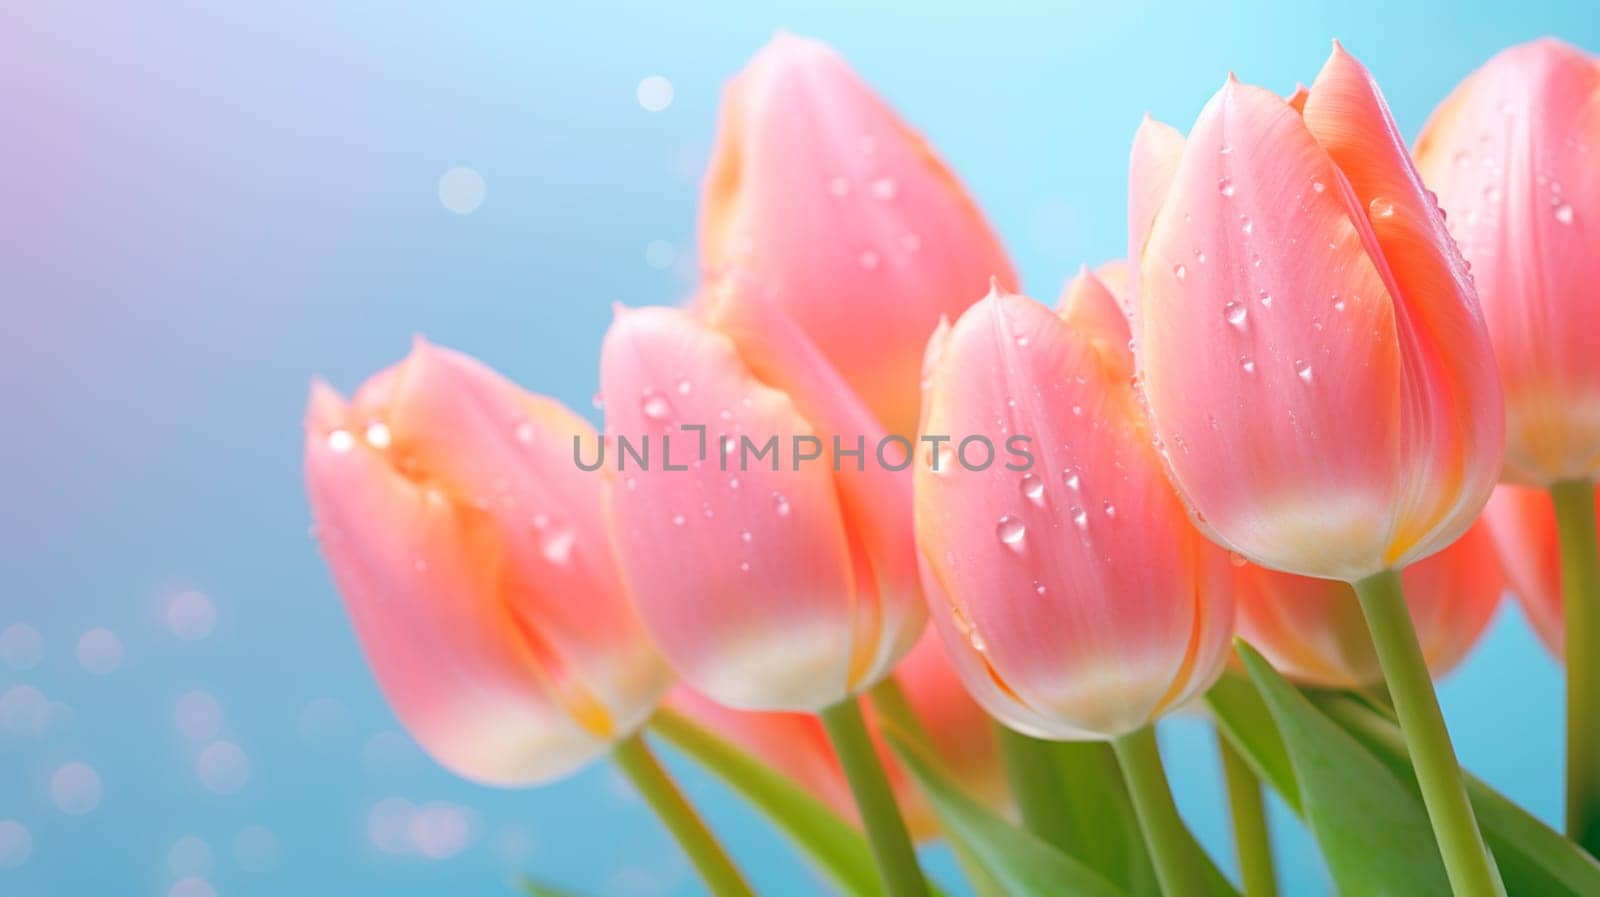 Beautiful tulips in pastel colors. Selective focus. Nature.